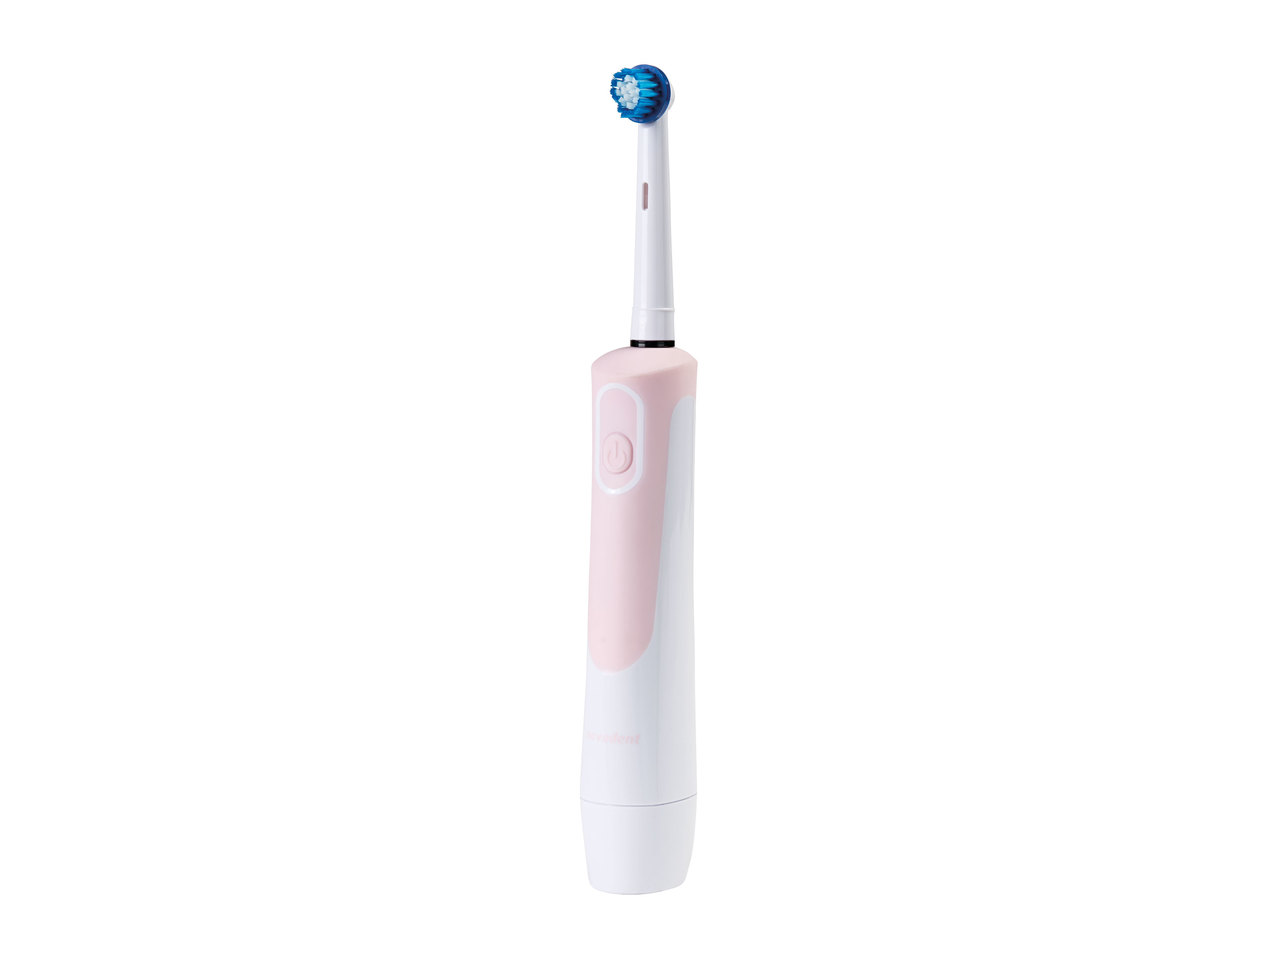 Nevadent Battery-Powered Toothbrush1